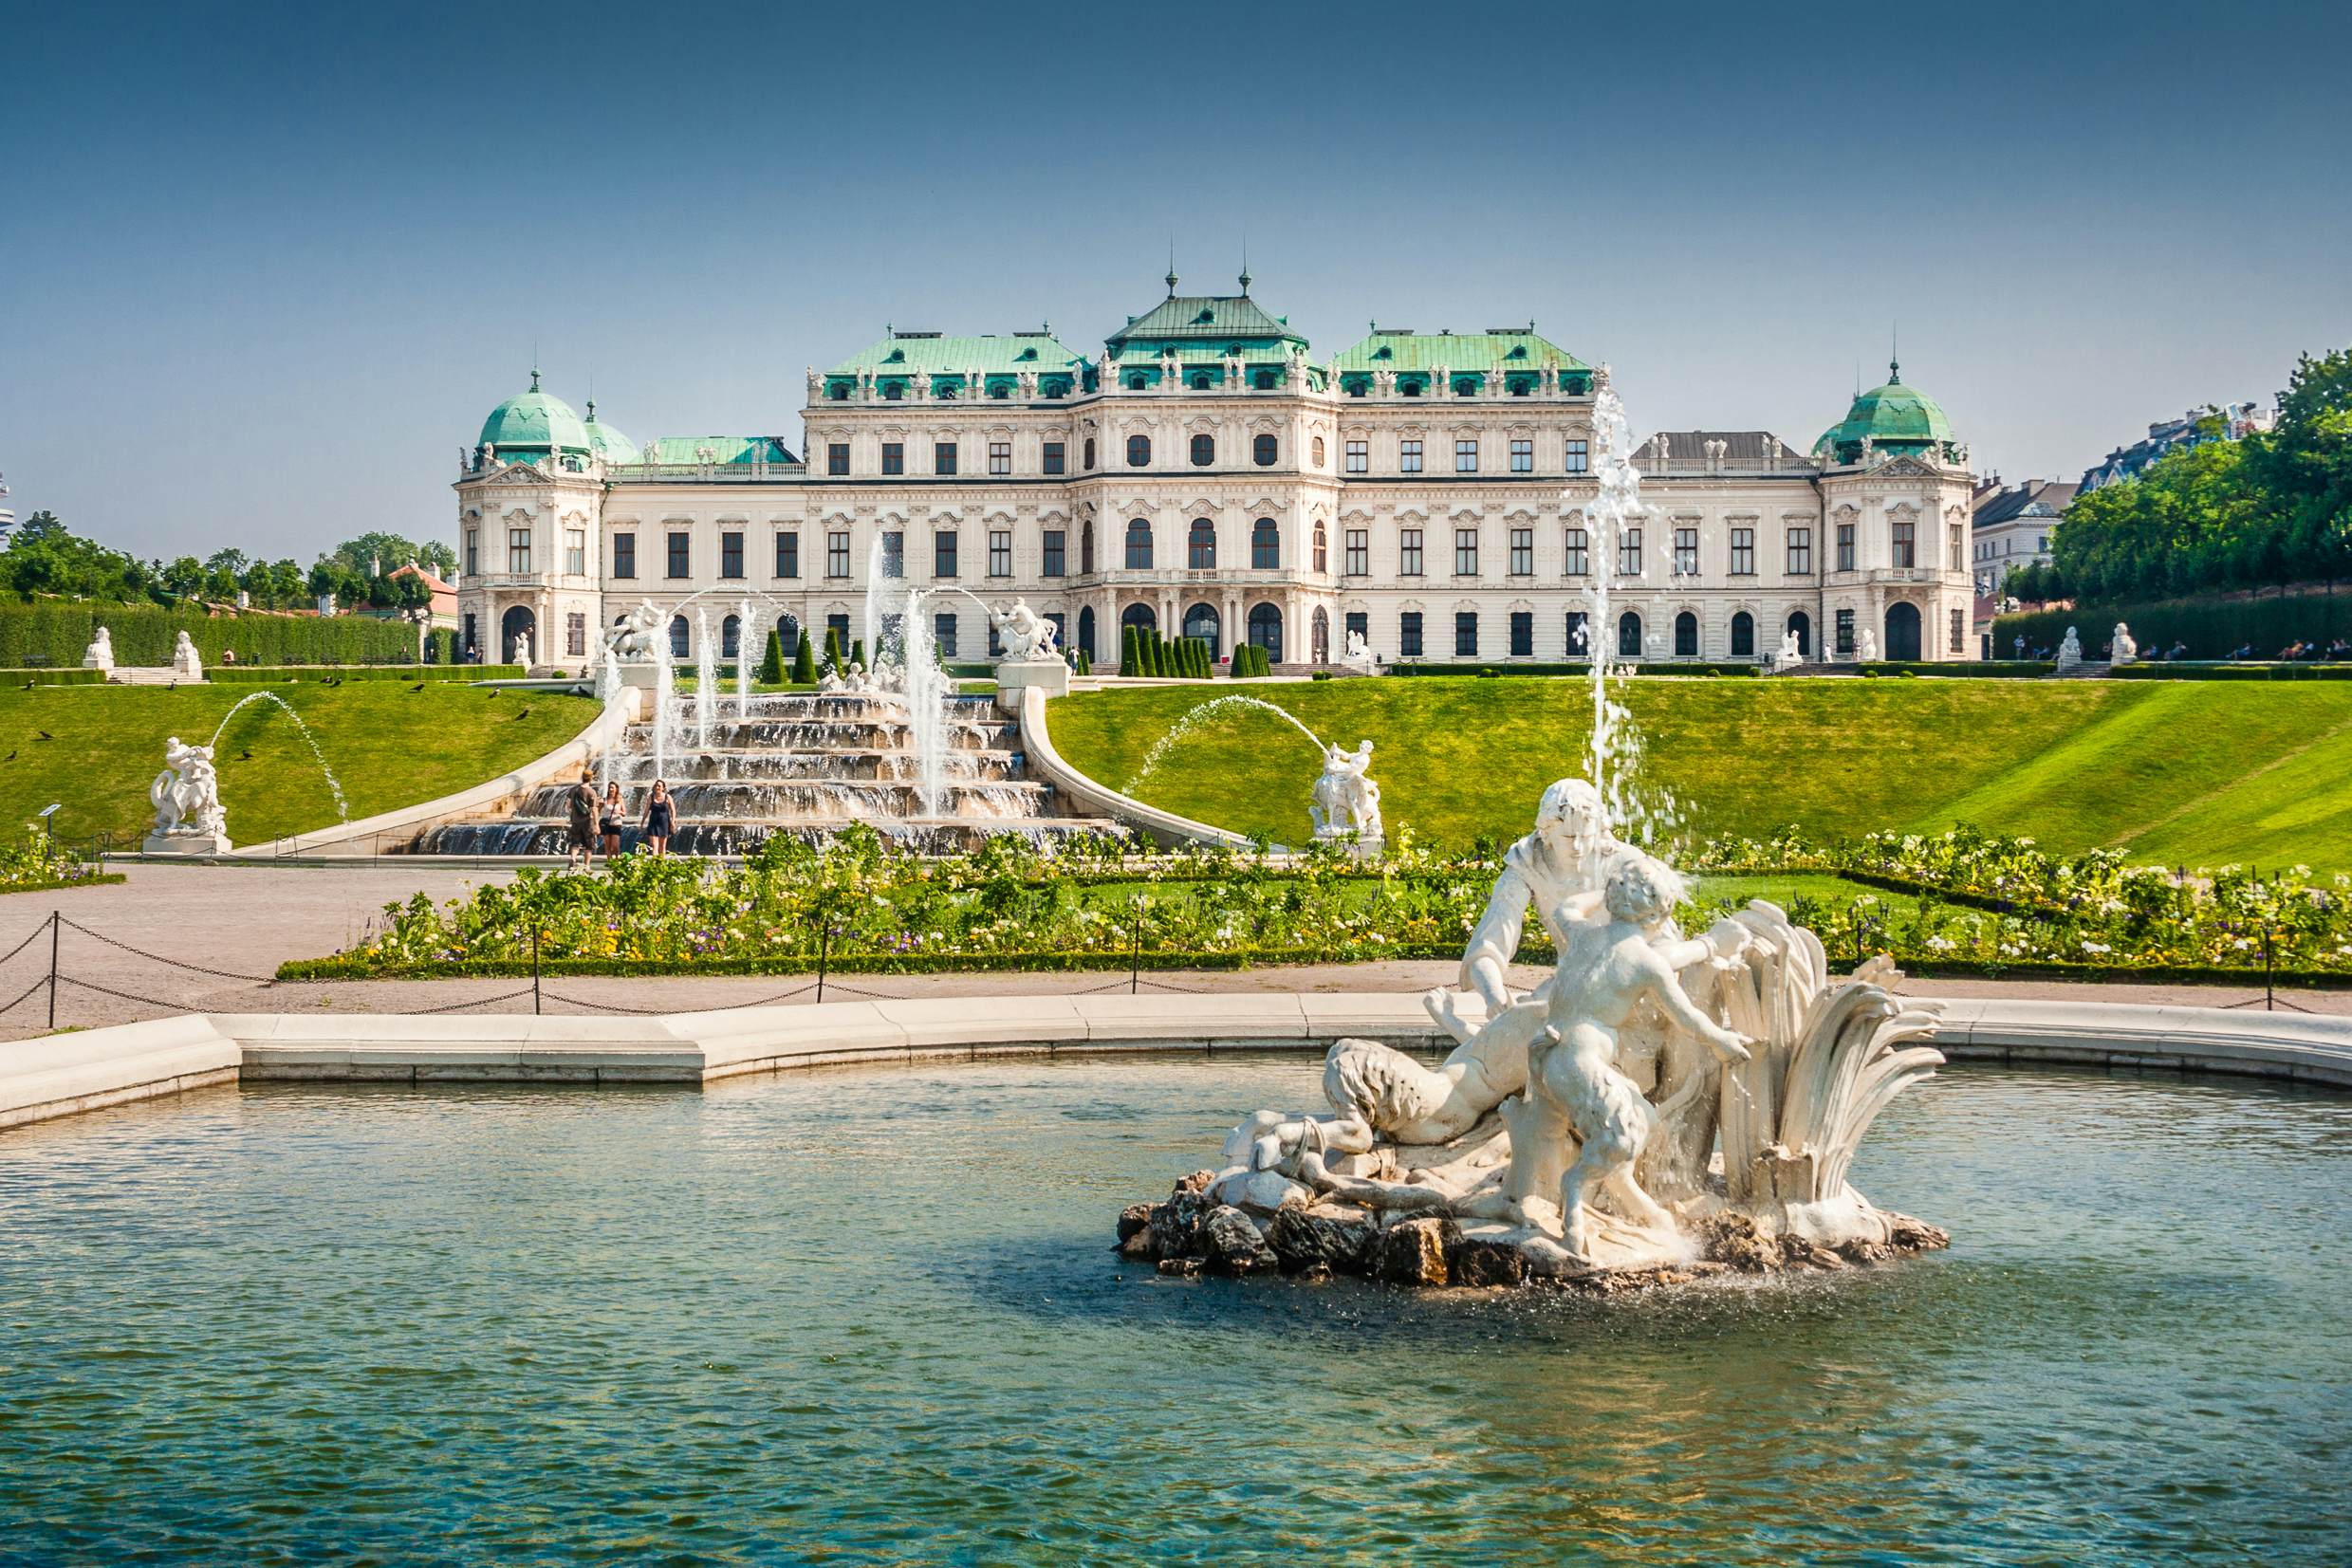 Schloss Belvedere was constructed for Prinz Oigen's Imperial